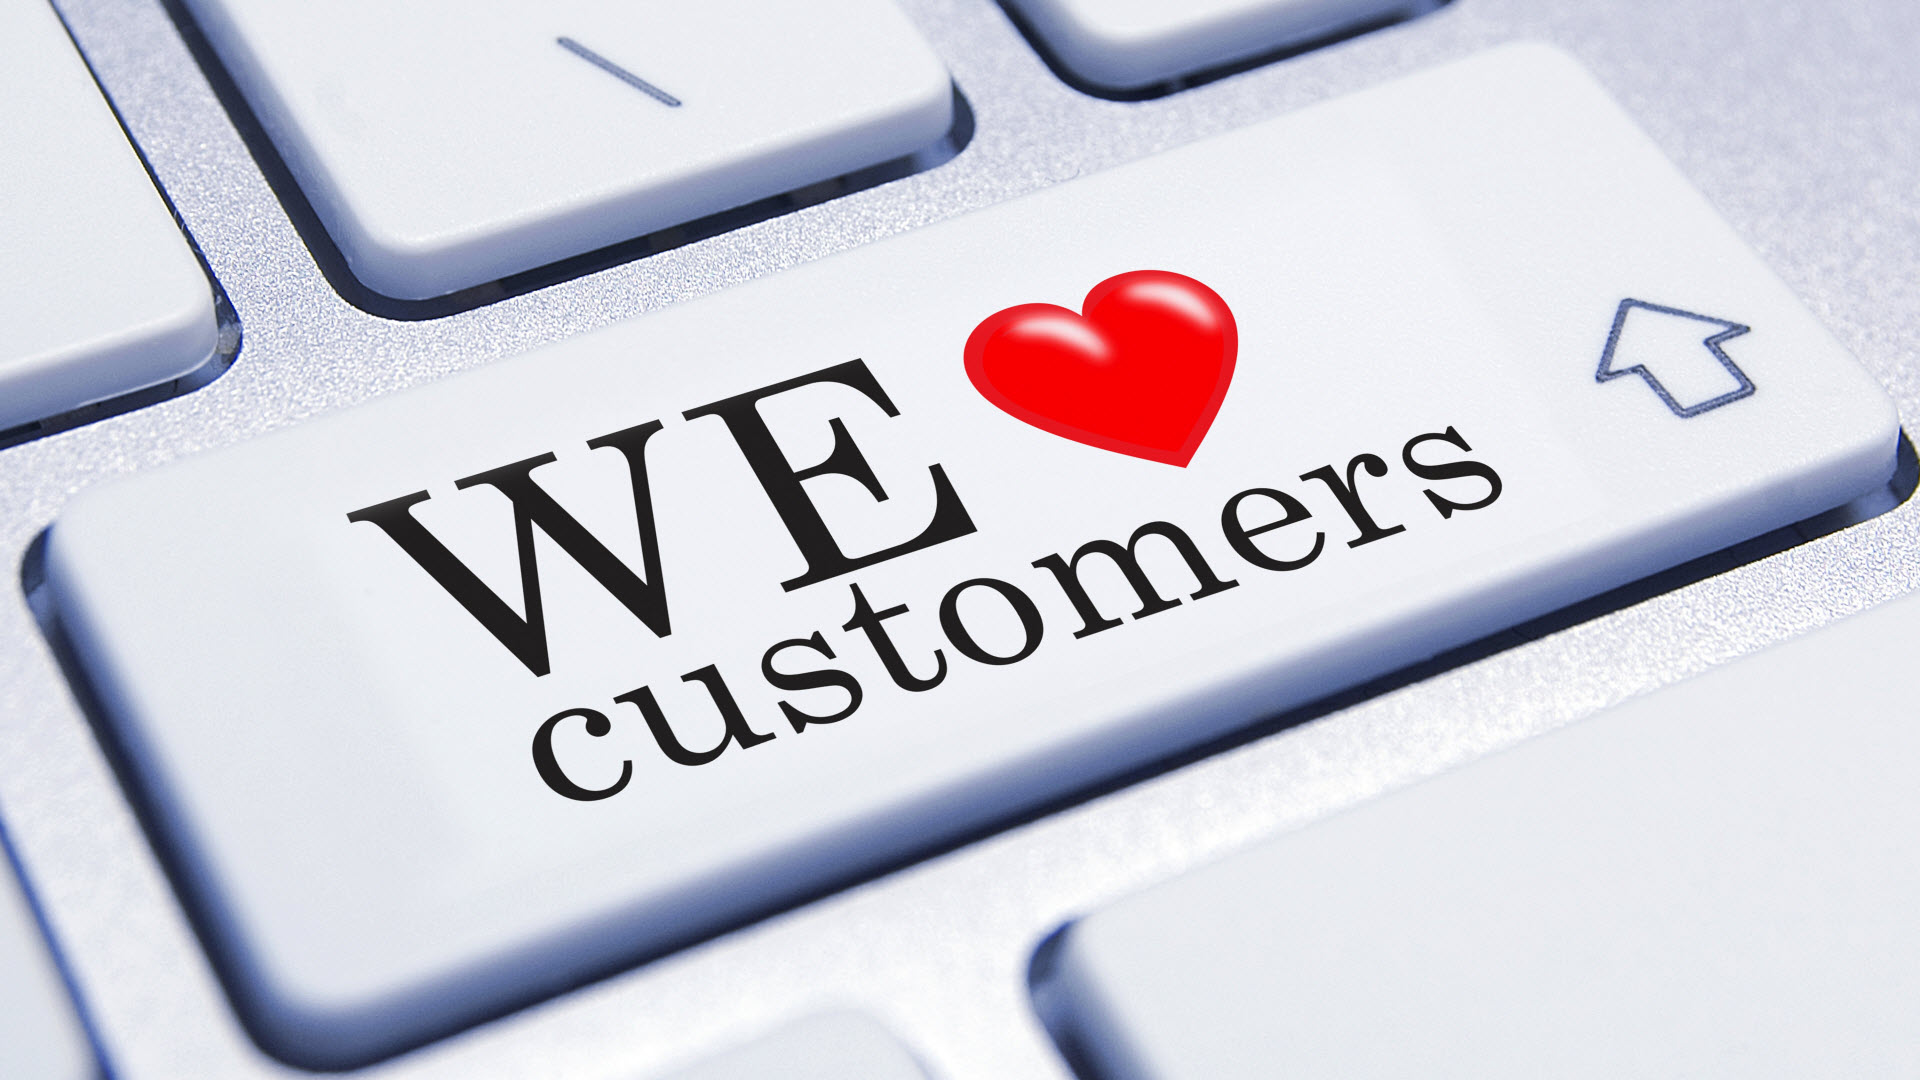 we_love_customers-1920x1080-72dpi